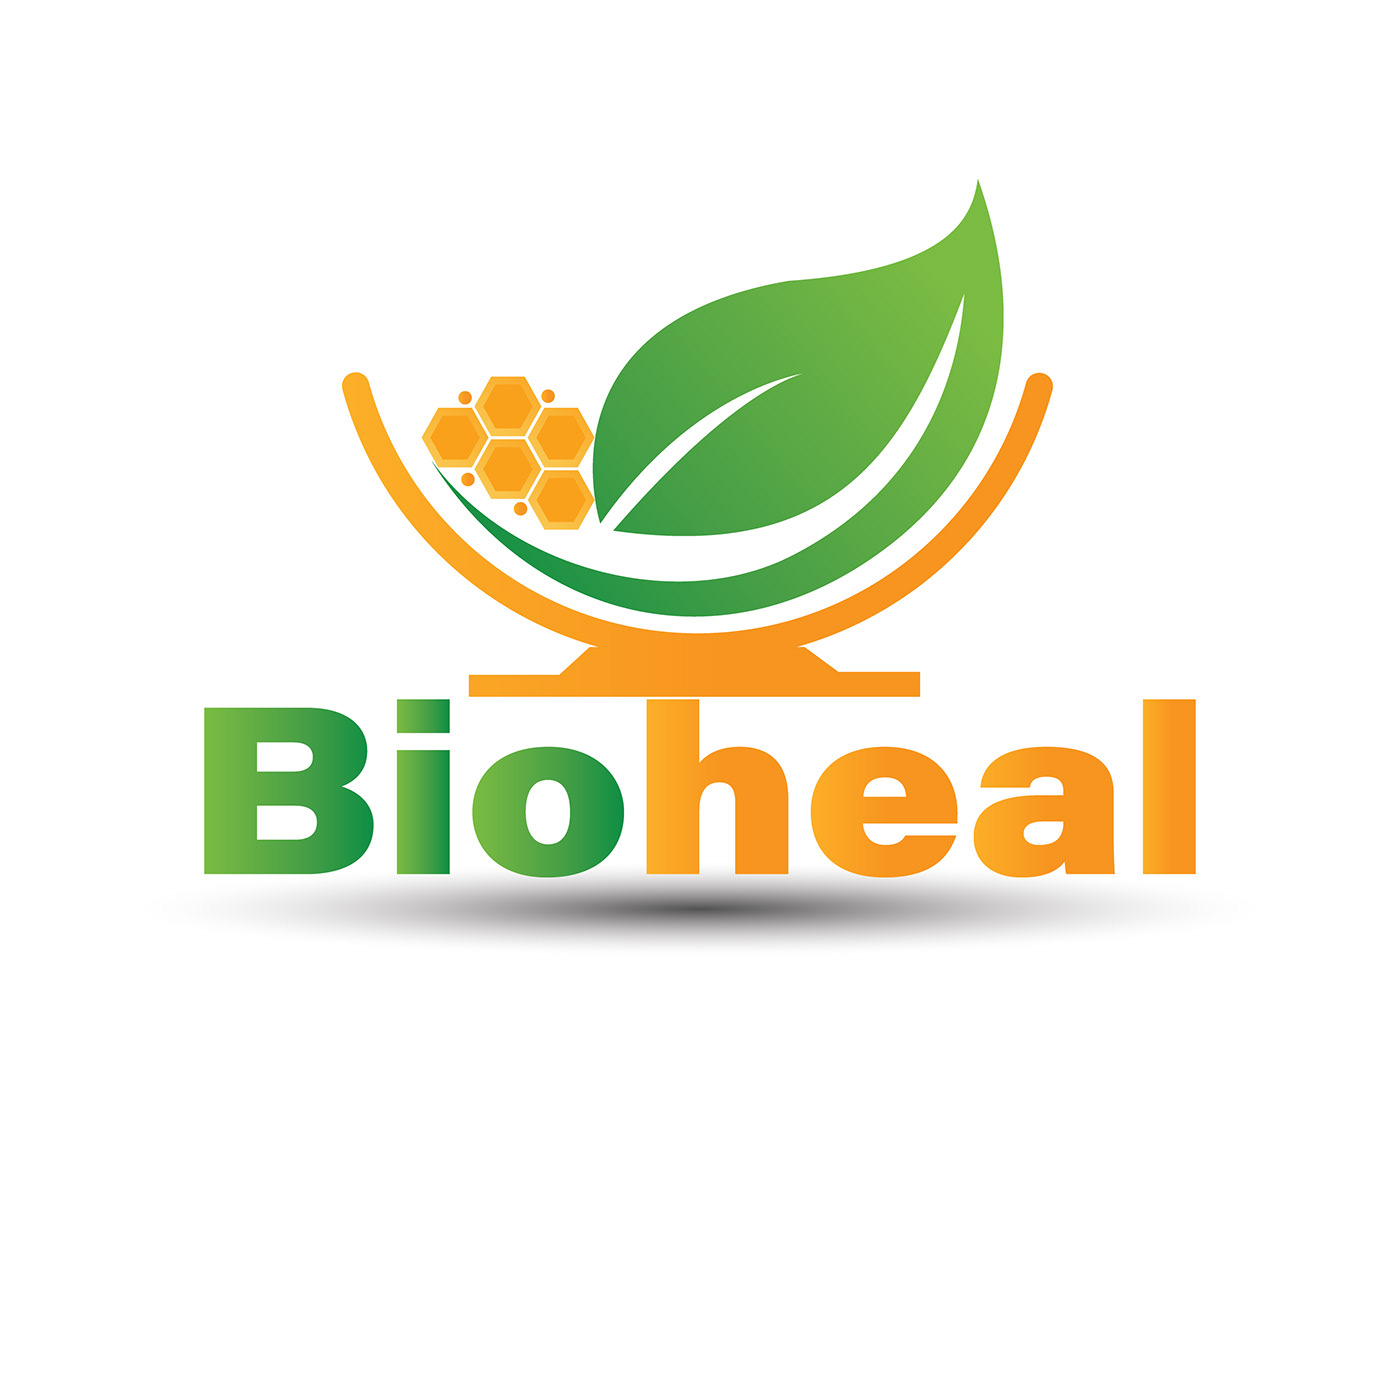 Tree  honey leaf Nature bio heal plate Food  Advertising  visual identity